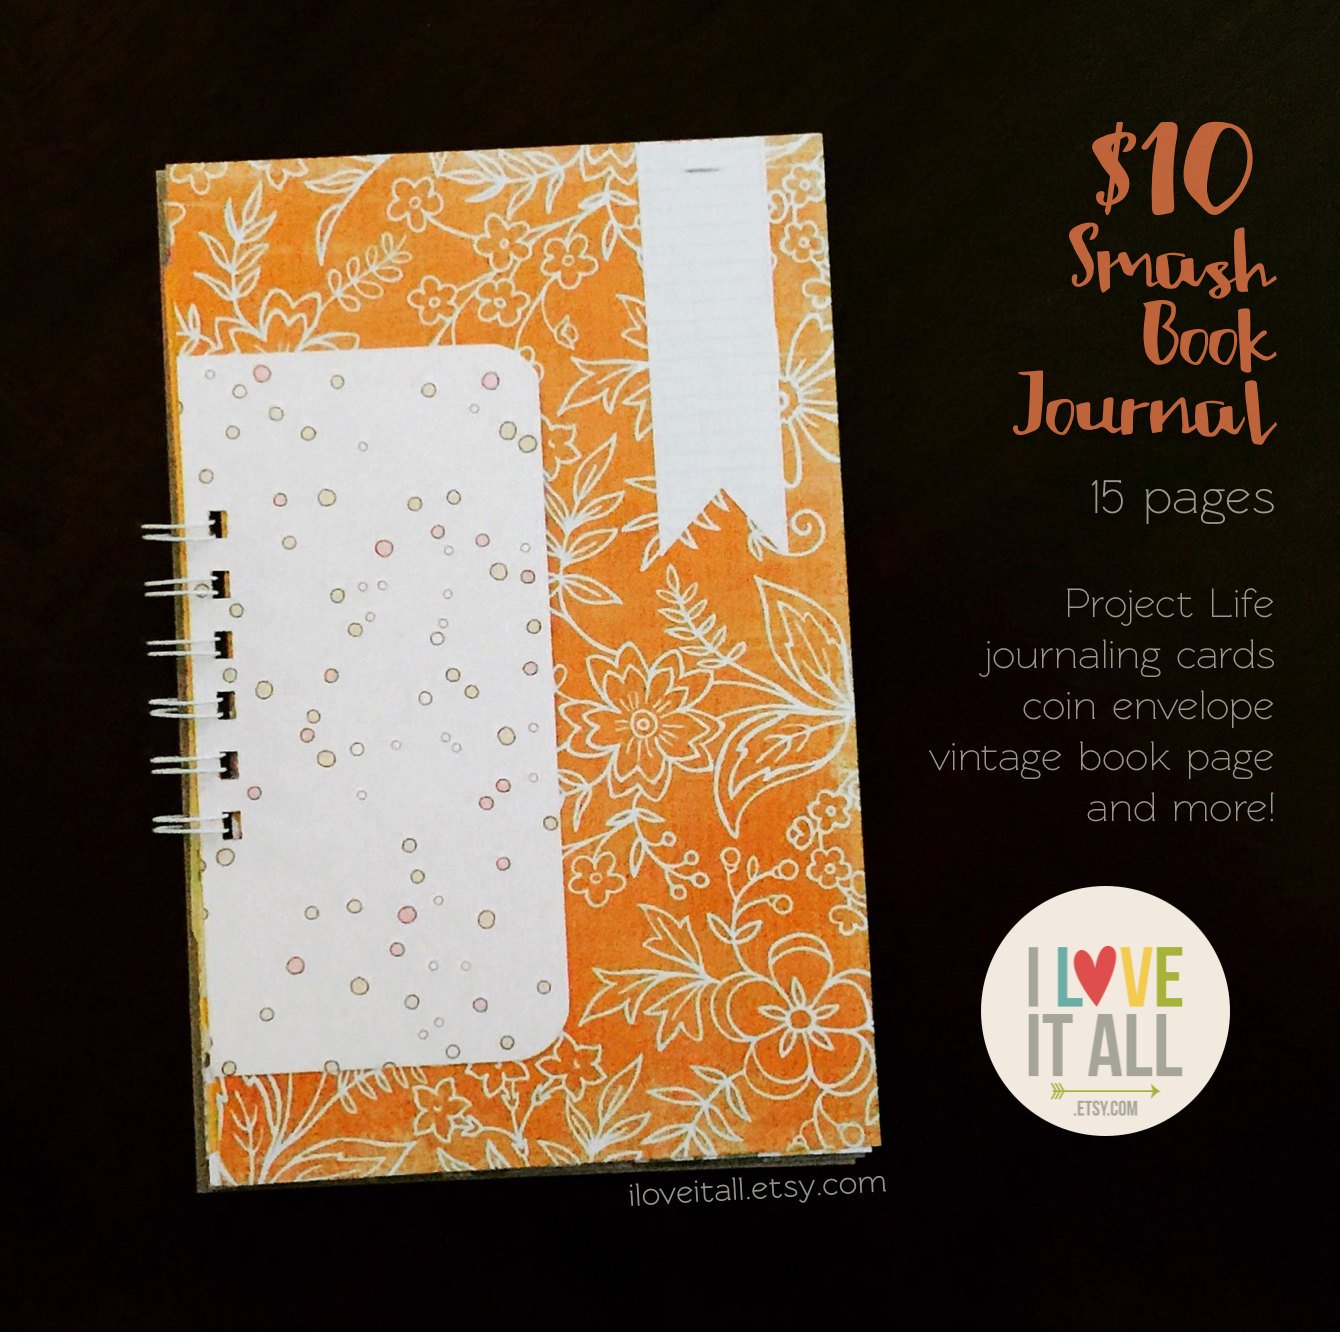 #30lists #journals #mini books #smashbook #mini album #notebooks #mixed media journals #instagram journal #gratitude journal